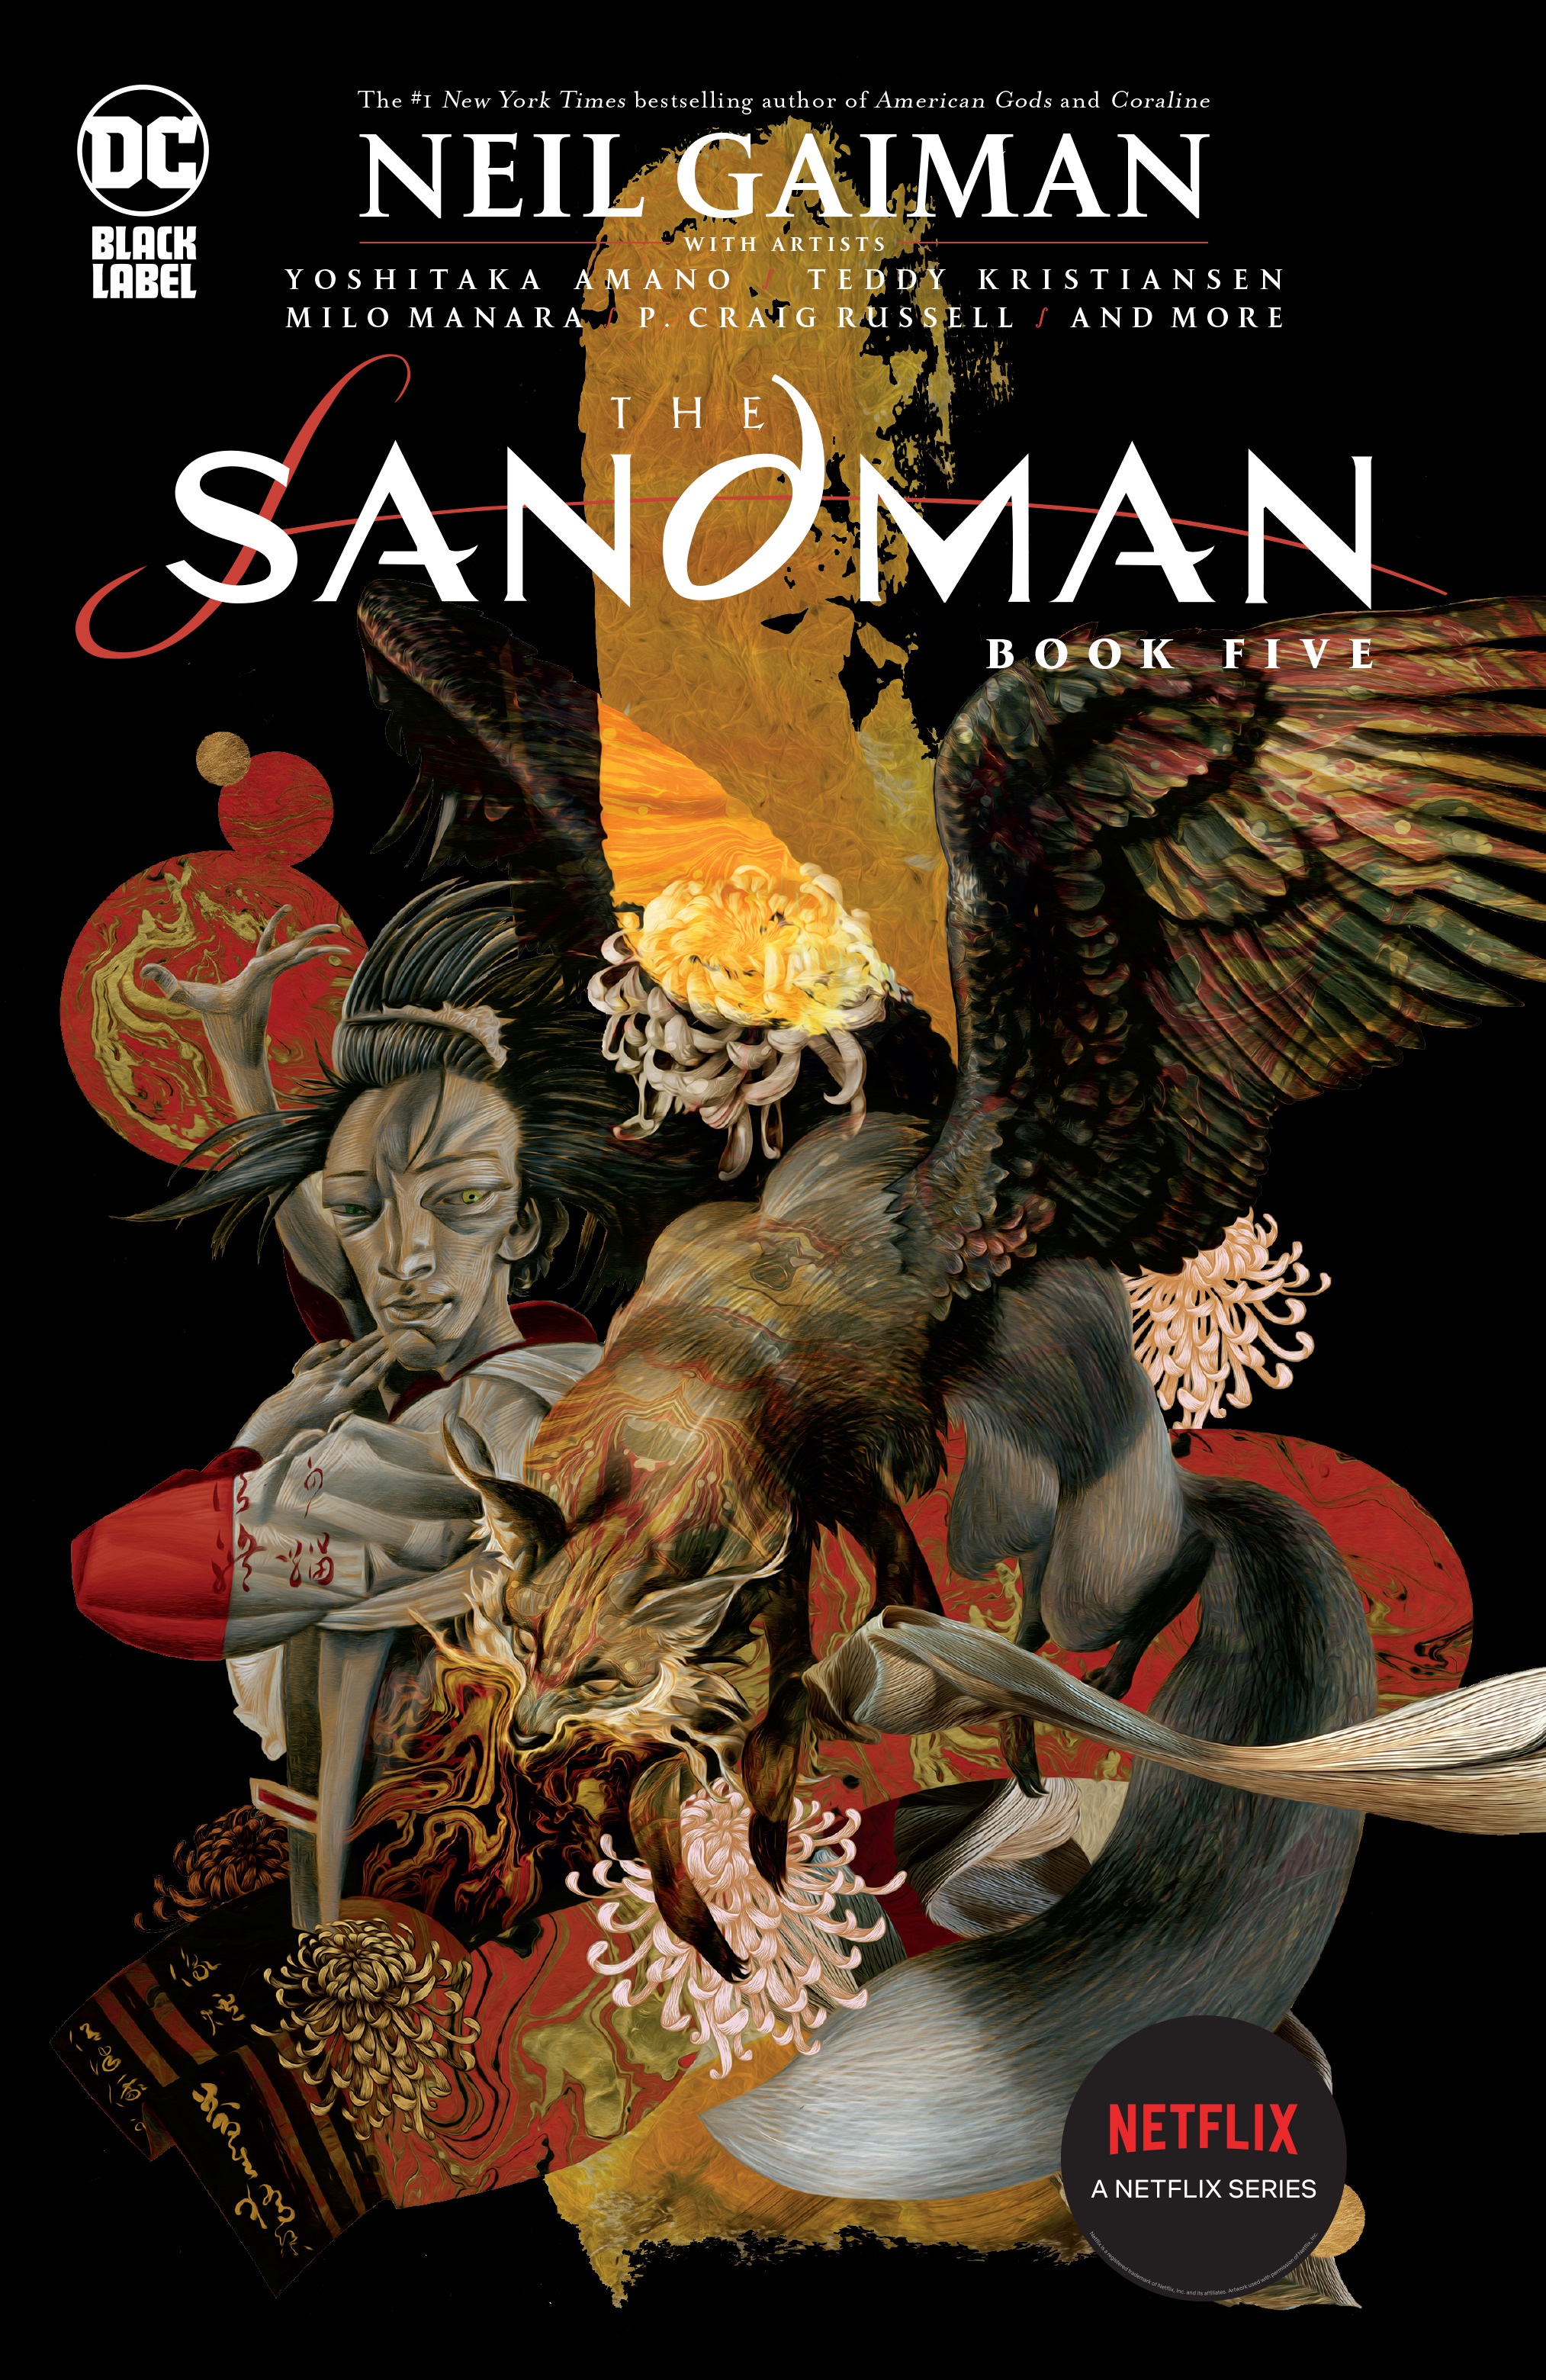 The Sandman Book 5 s/c